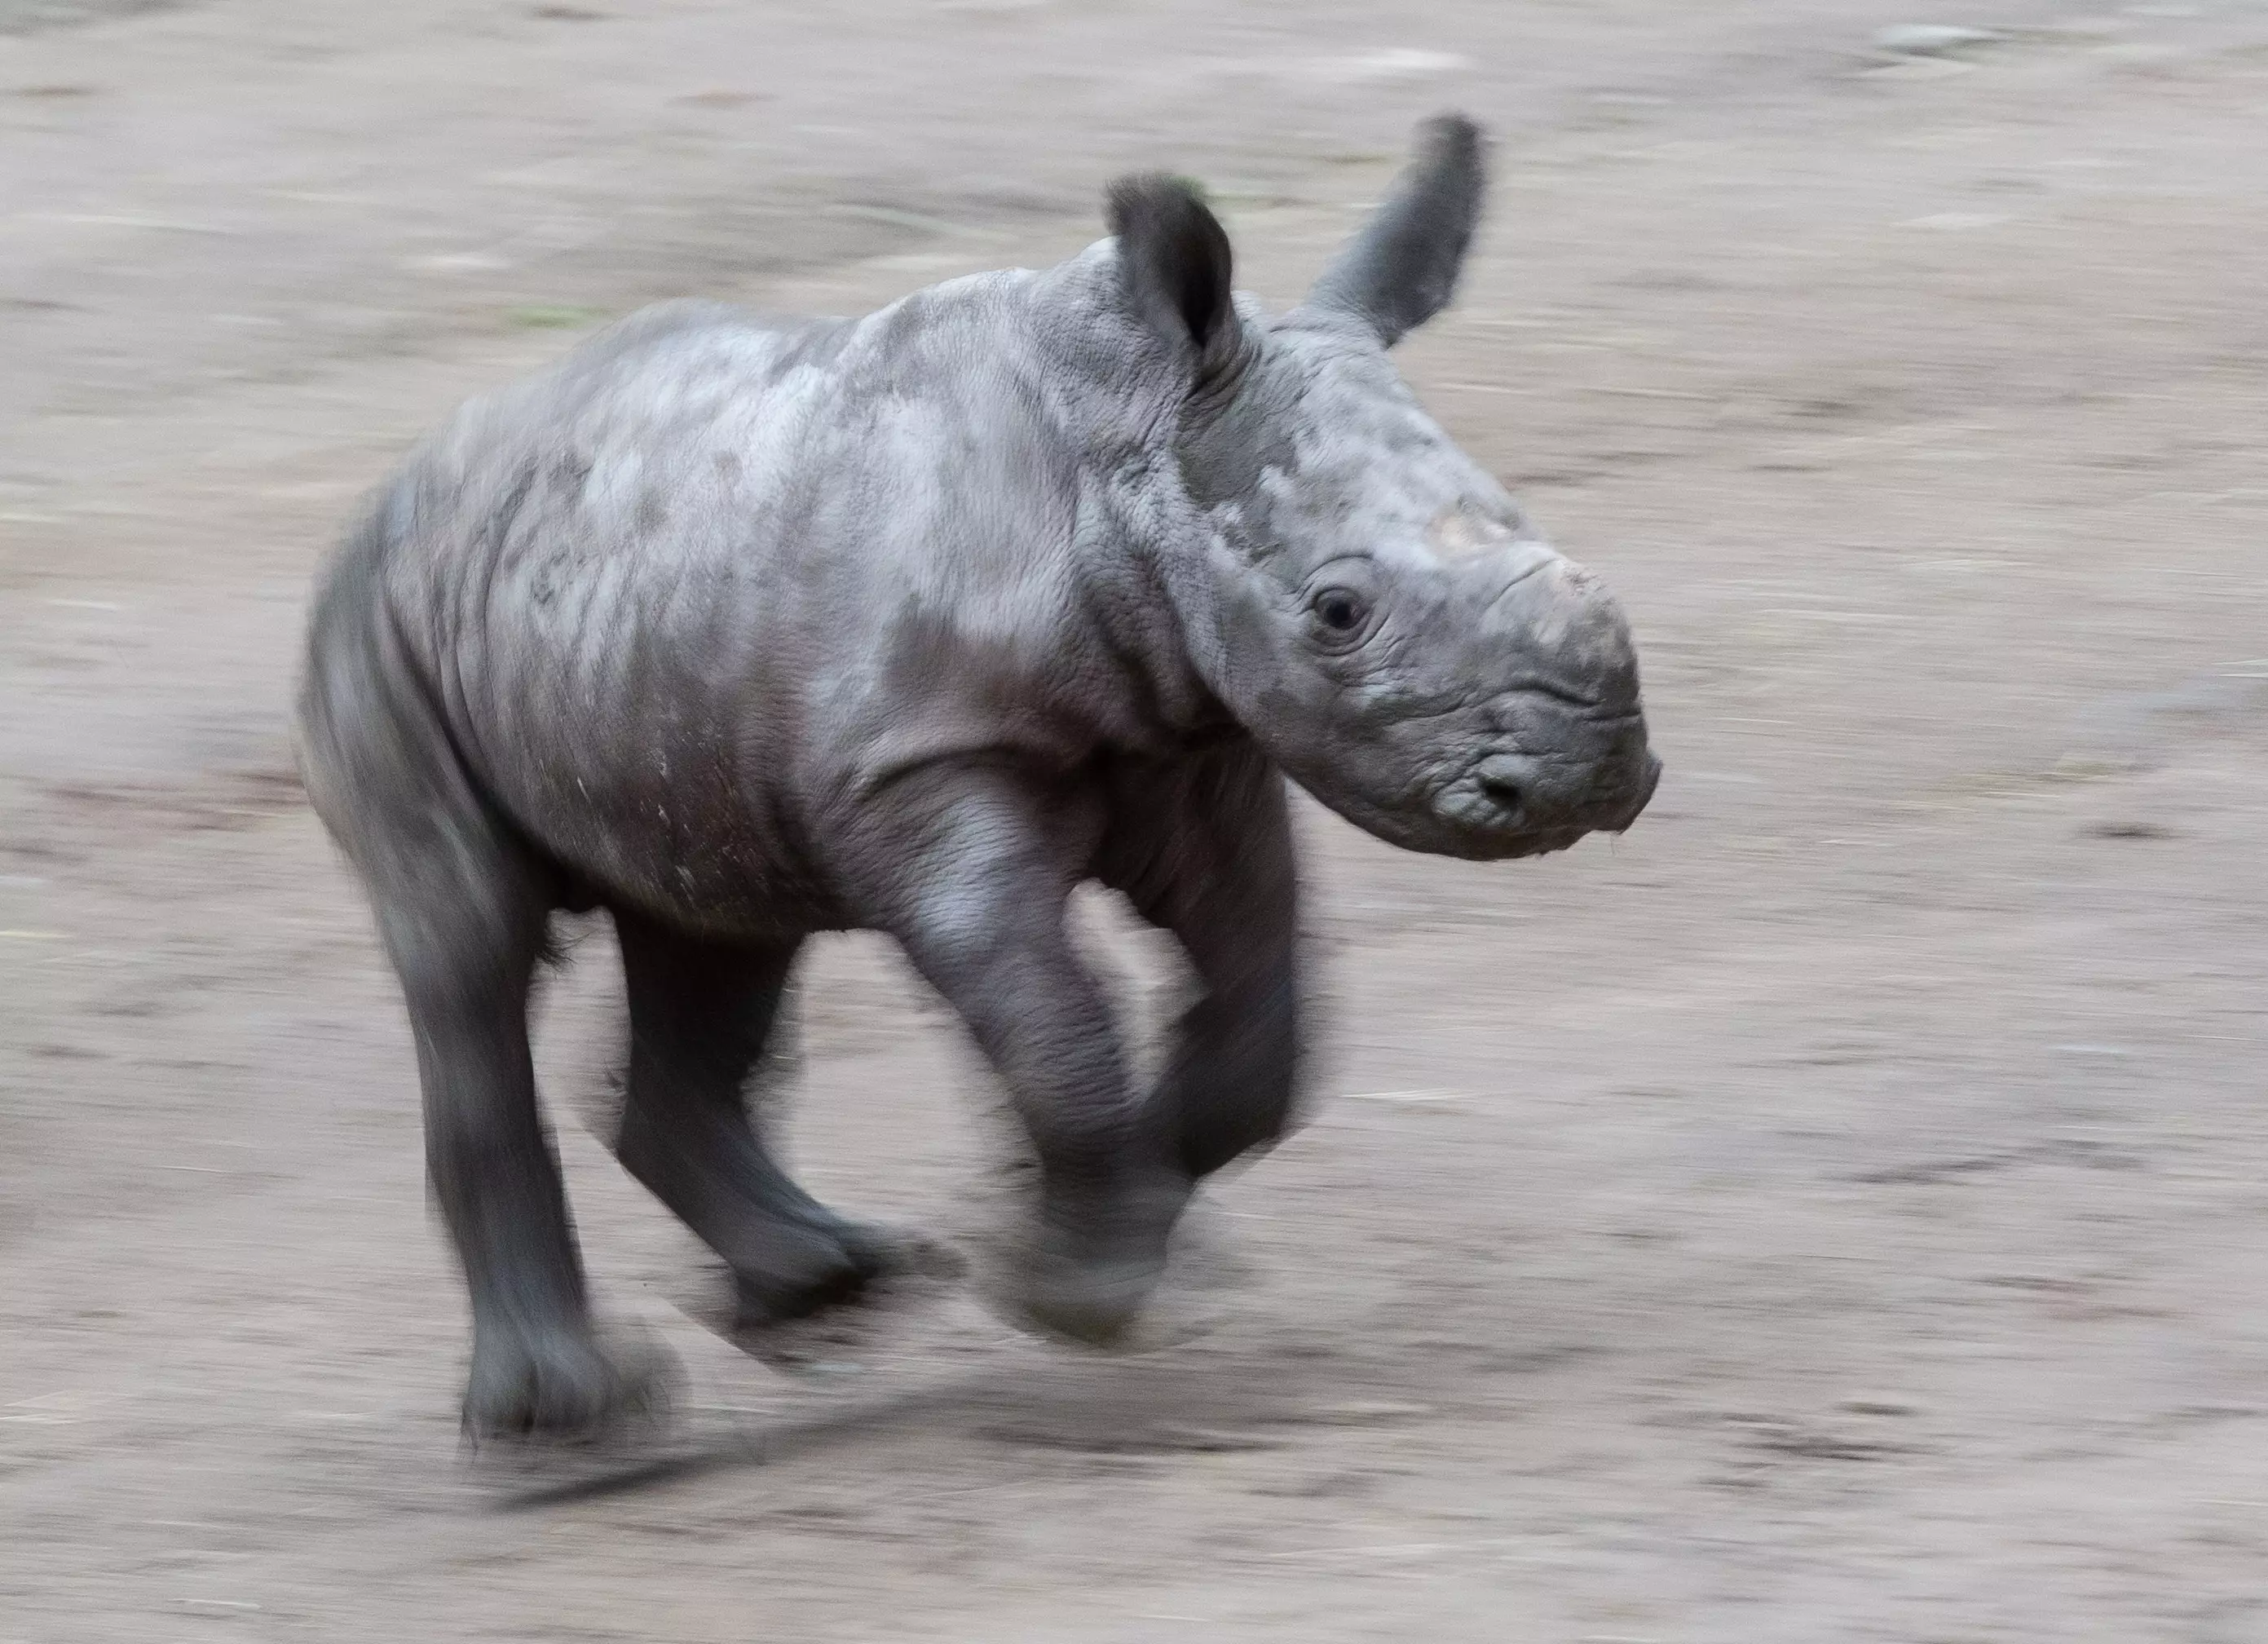 A baby rhino in Dortmund Zoo, Germany.